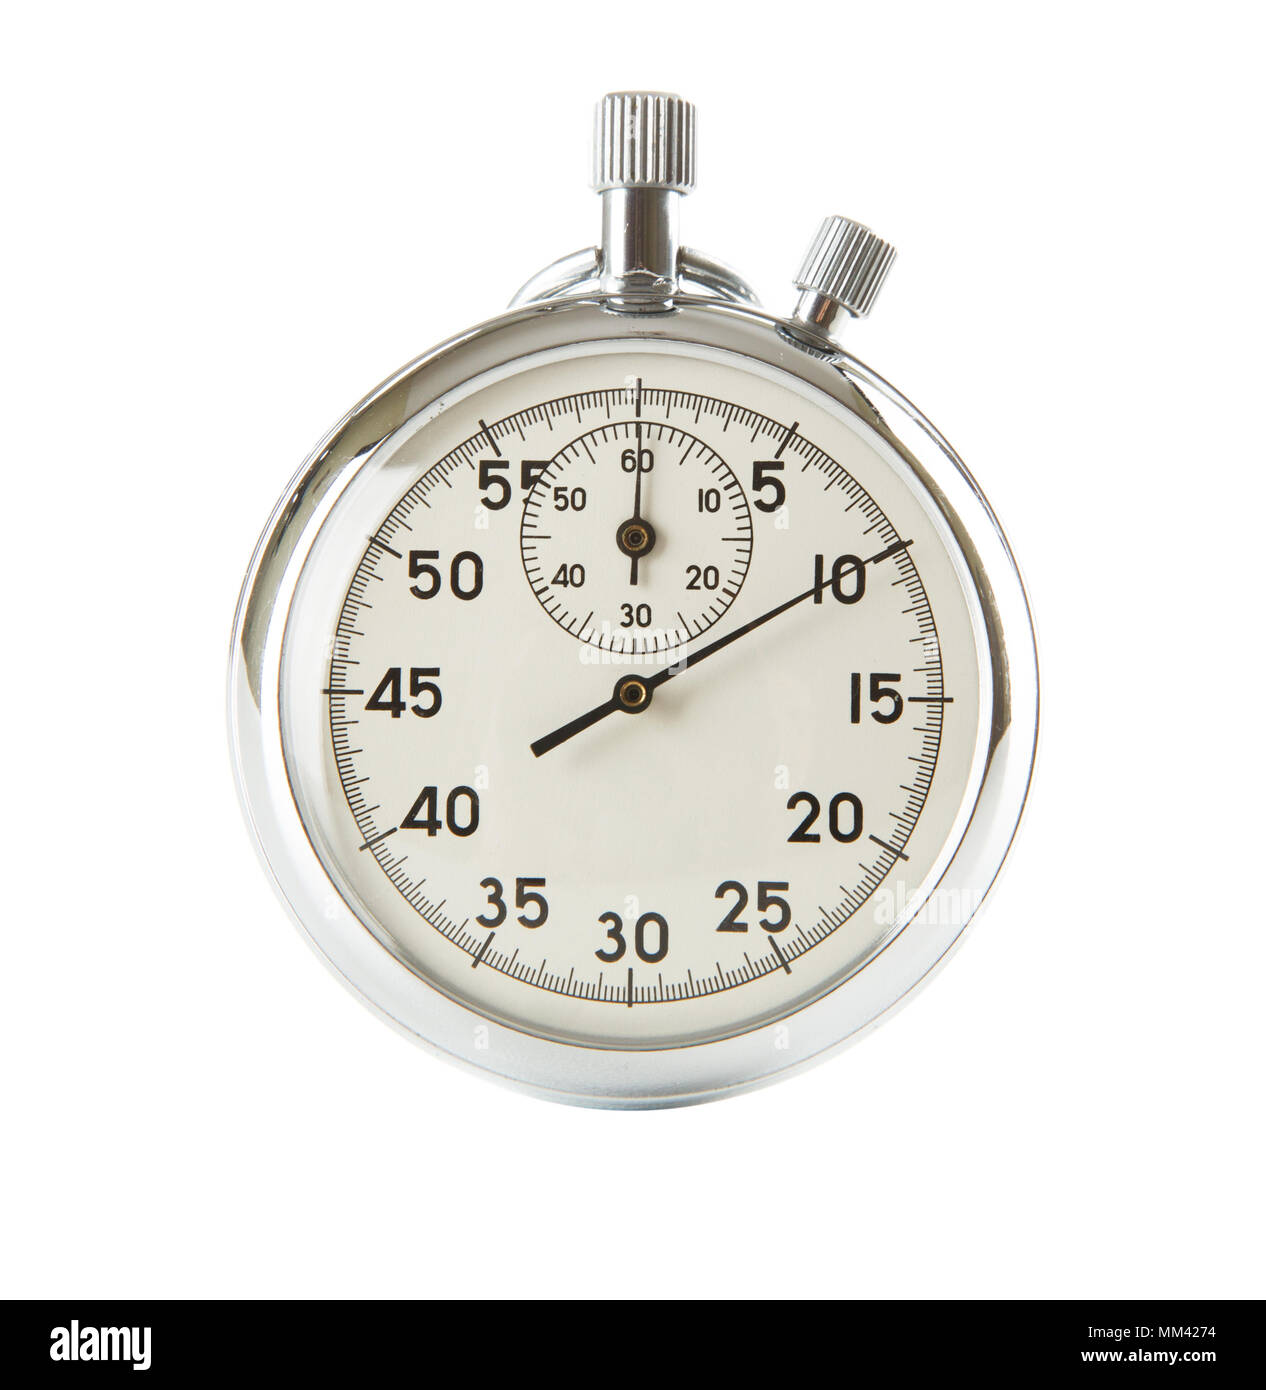 Cronometro analogico su sfondo bianco Foto stock - Alamy